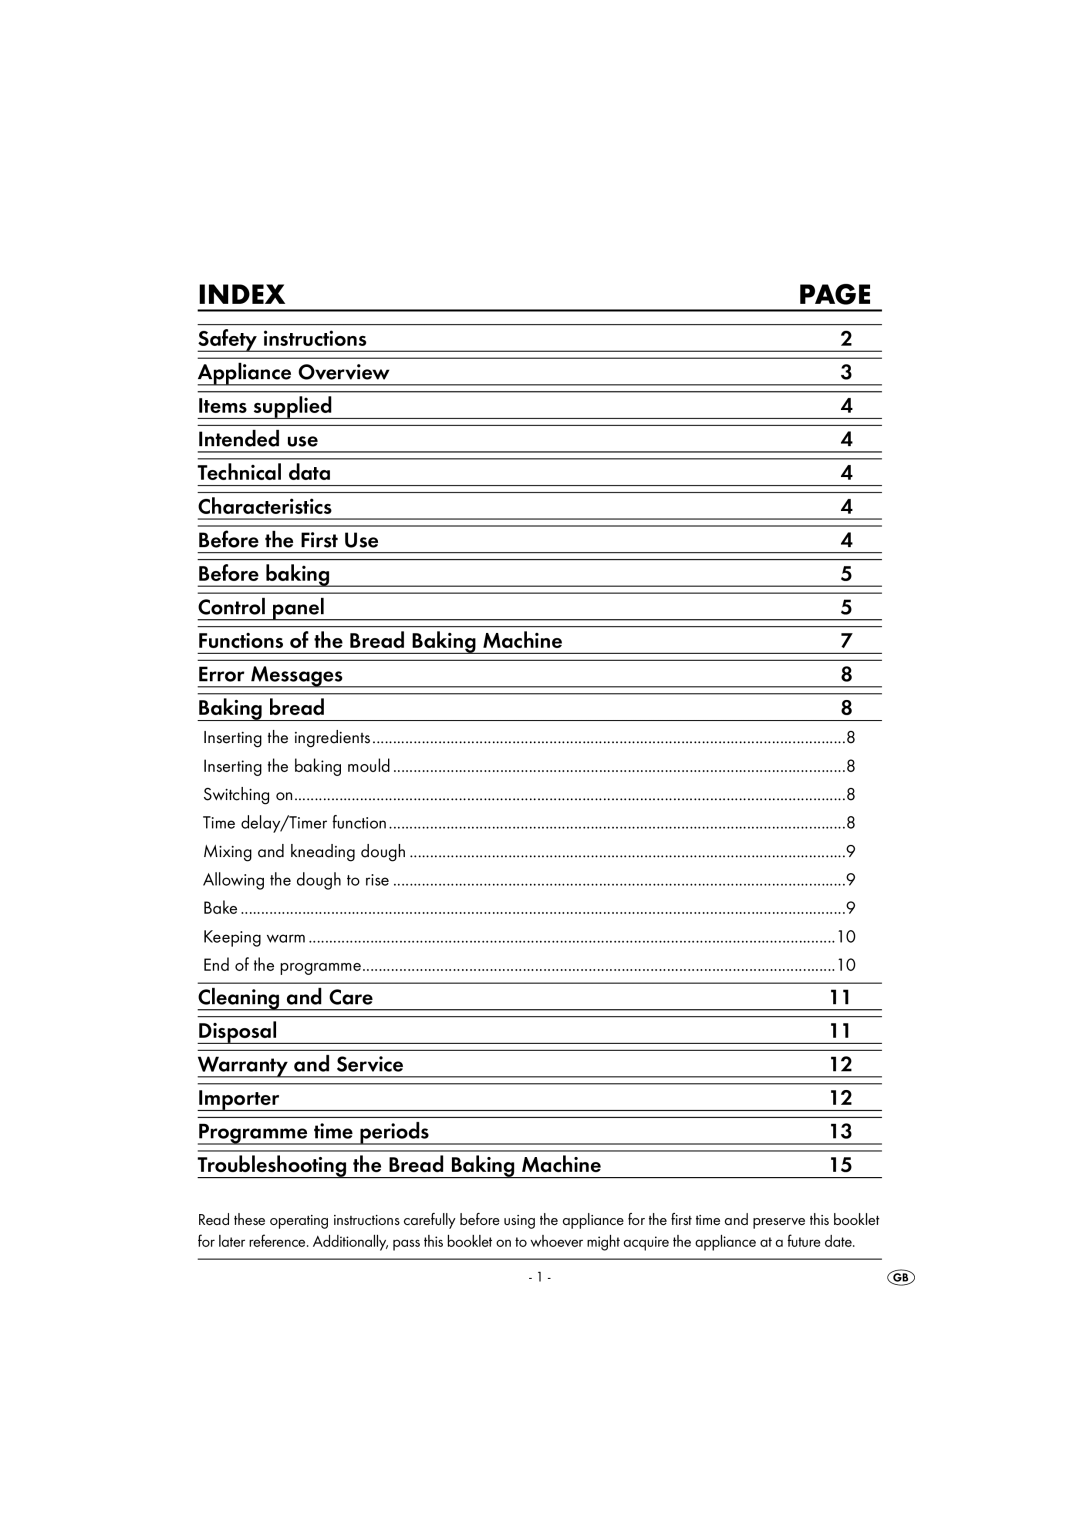 Kompernass KH 1172 manual Index, Page 